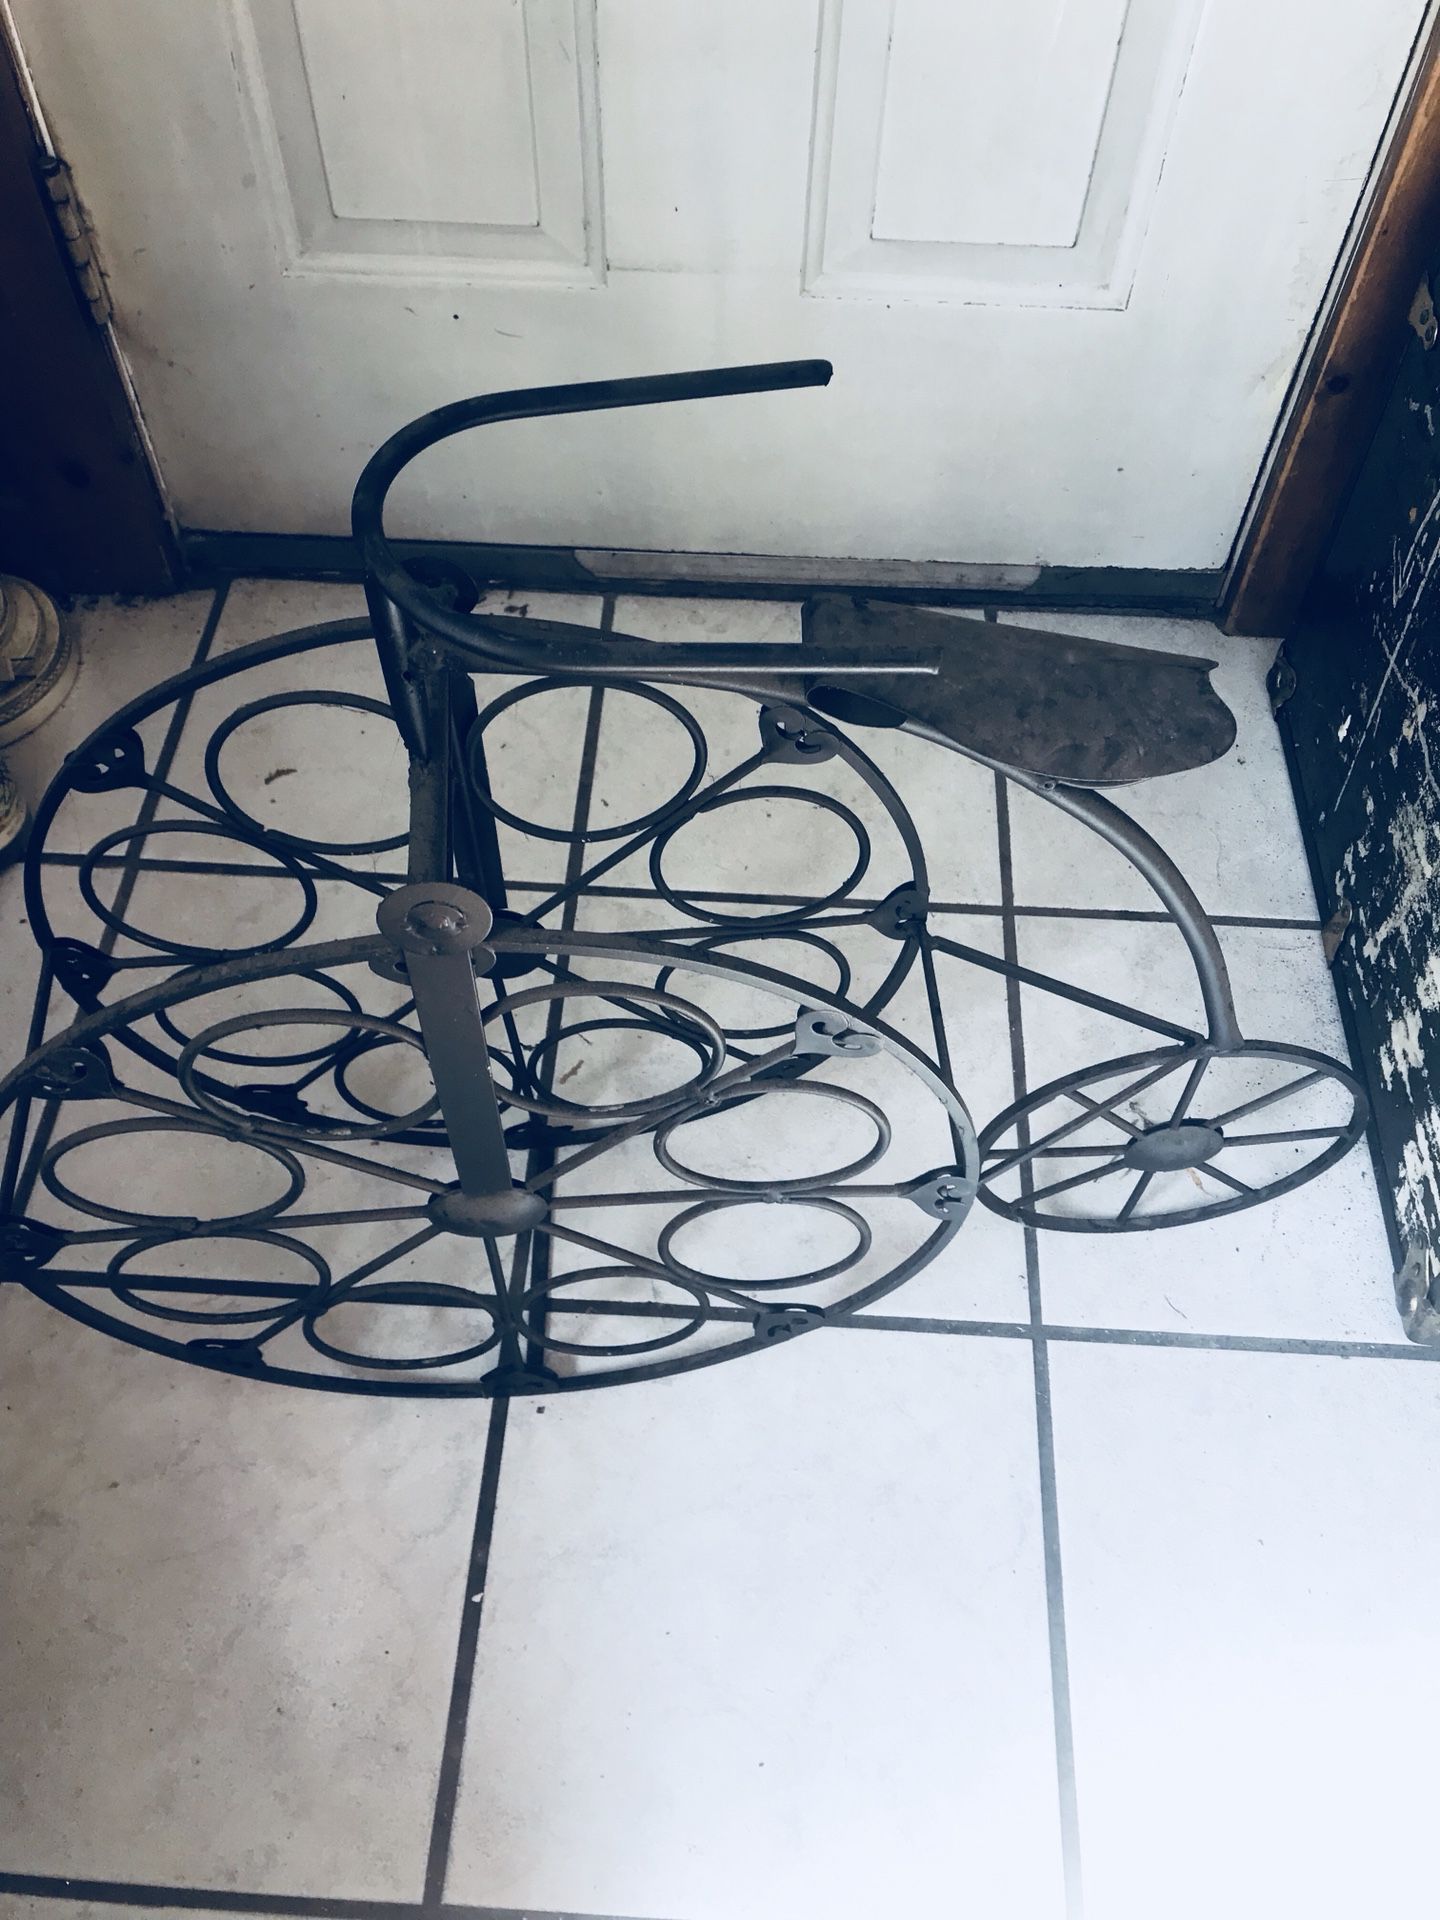 Black metal bike wine rack